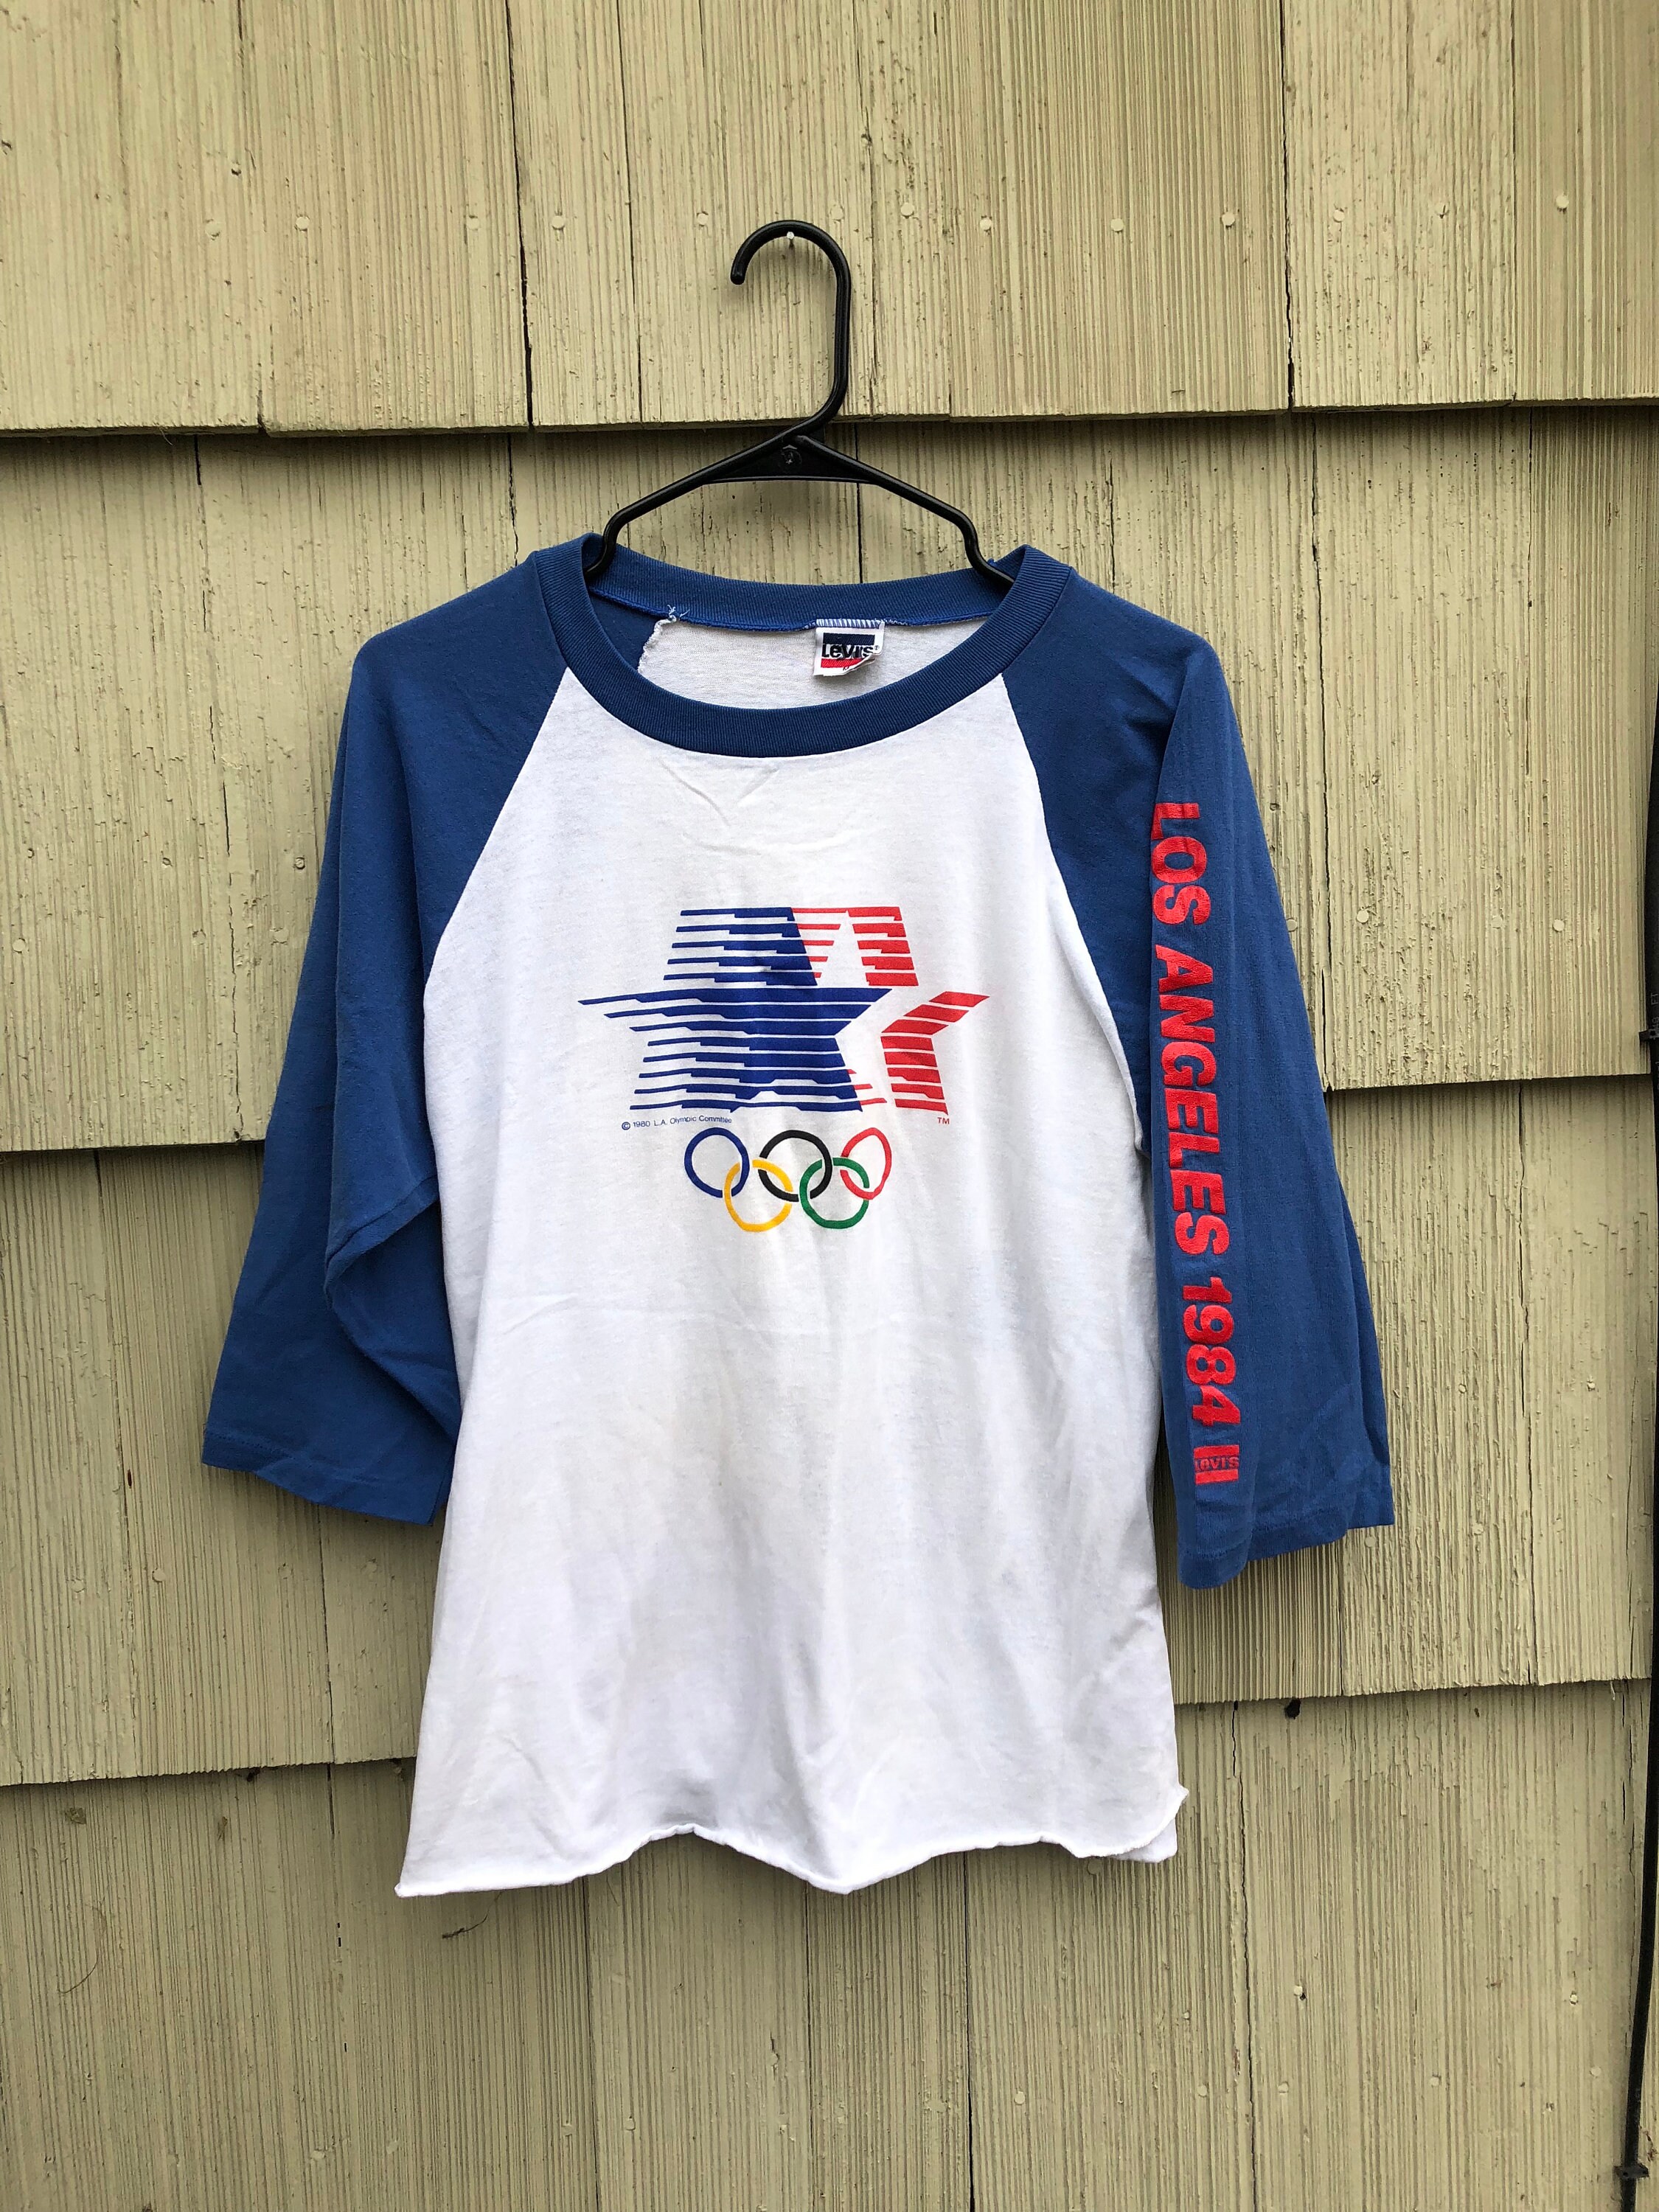 Kleding Herenkleding Overhemden & T-shirts T-shirts T-shirts met print 80s Vintage 1984 Levi’s X Olympics Single Stitch Ringer Tee 